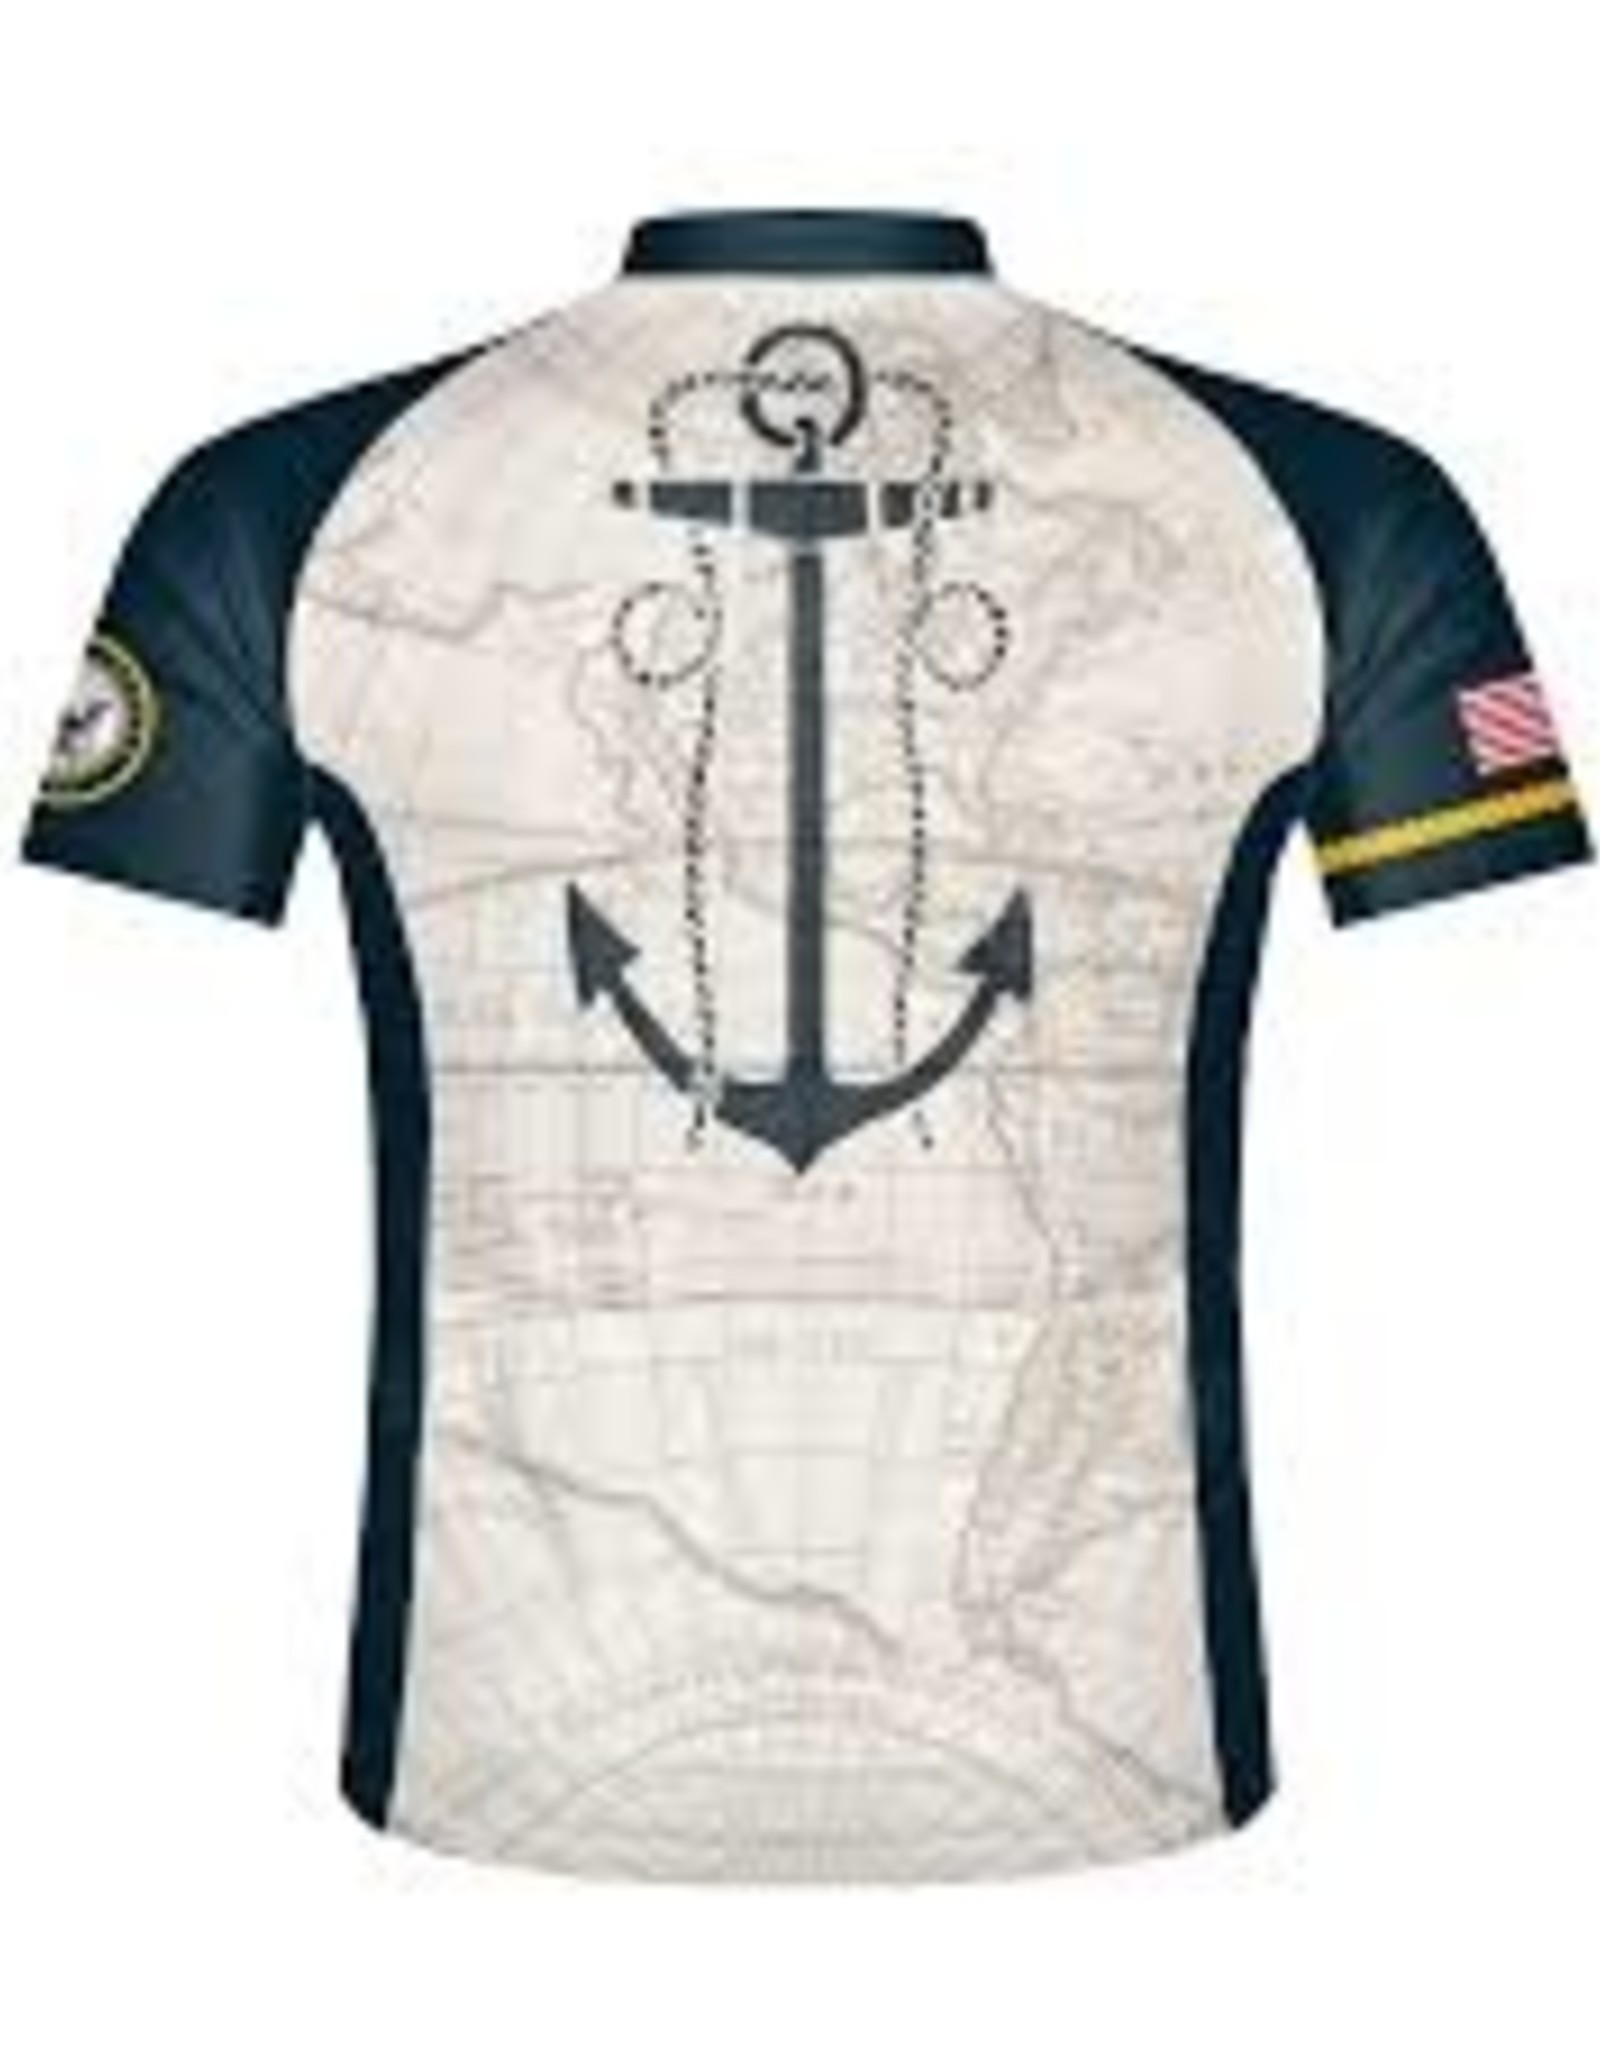 Primal Wear Jersey - Primal US Navy Sea Chart